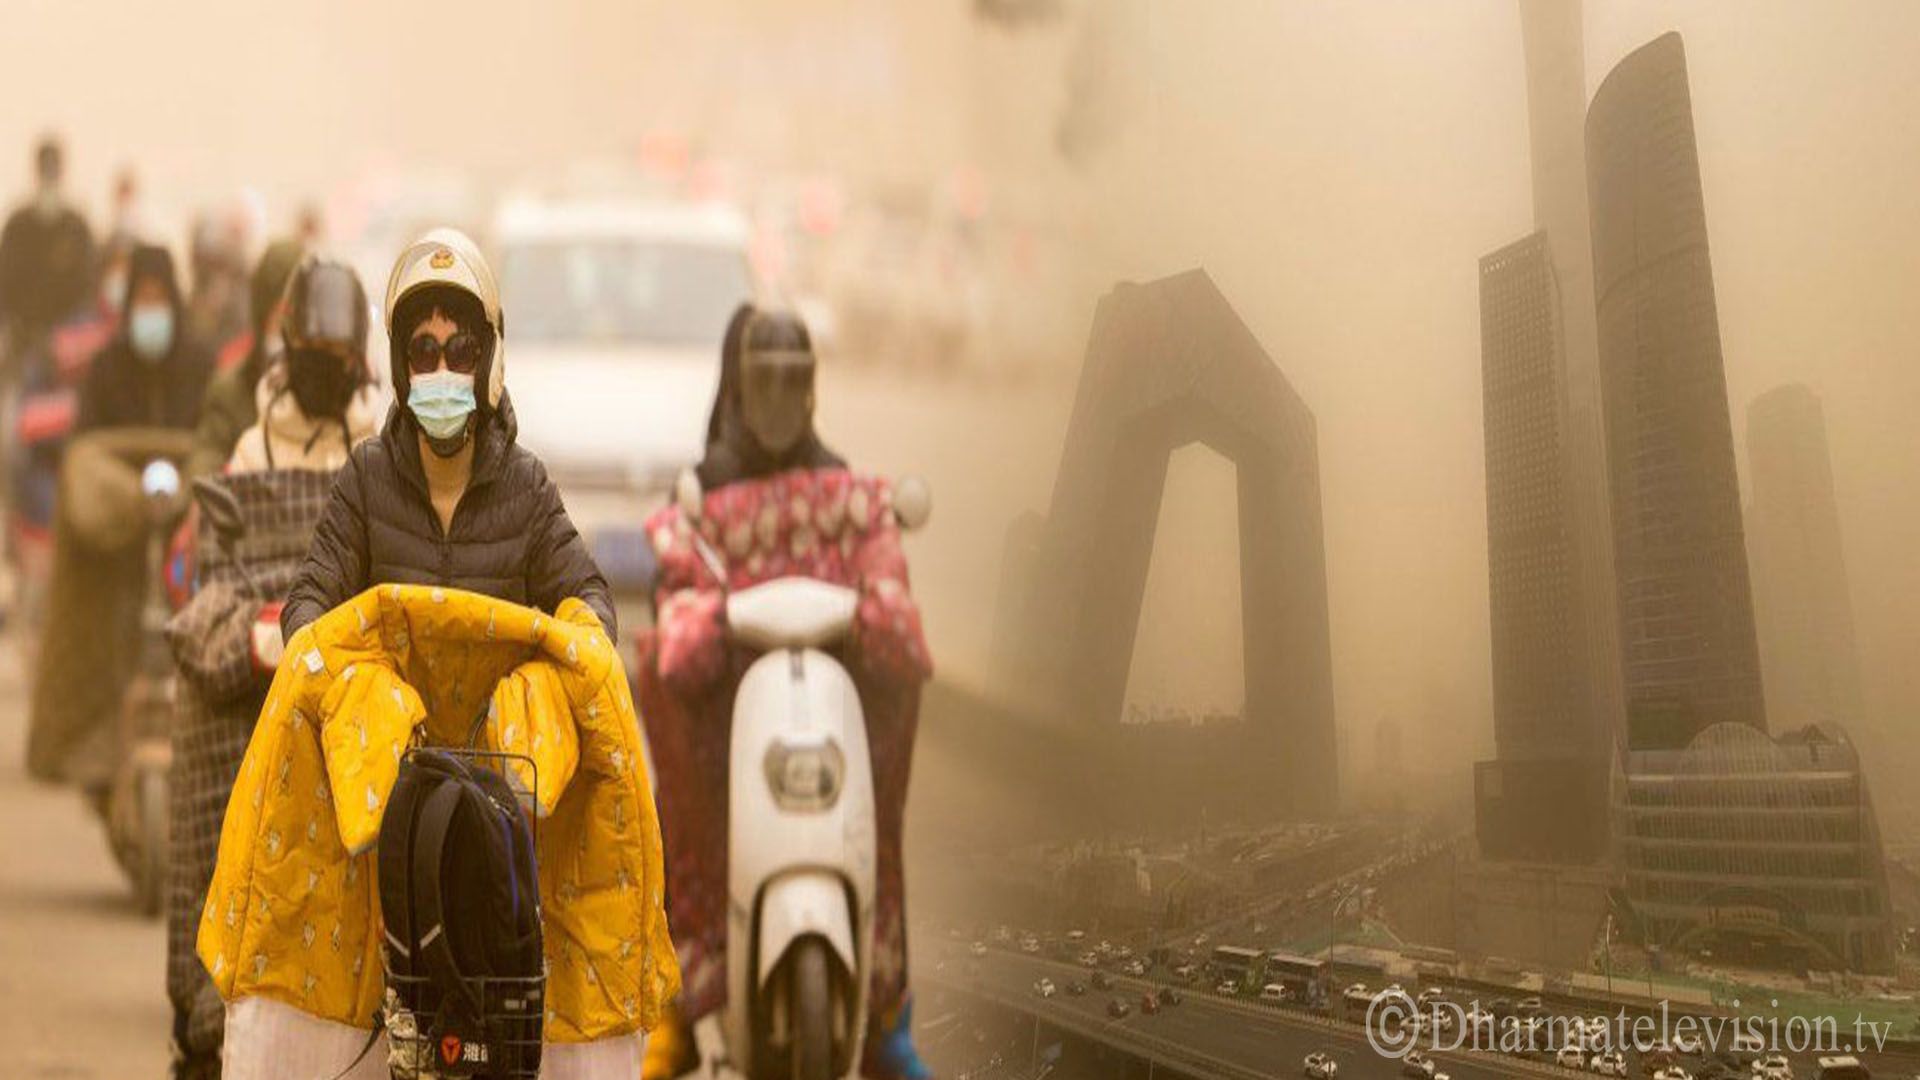 Beijing hit by worst sandstorm “Apocalyptic Skies” in a decade